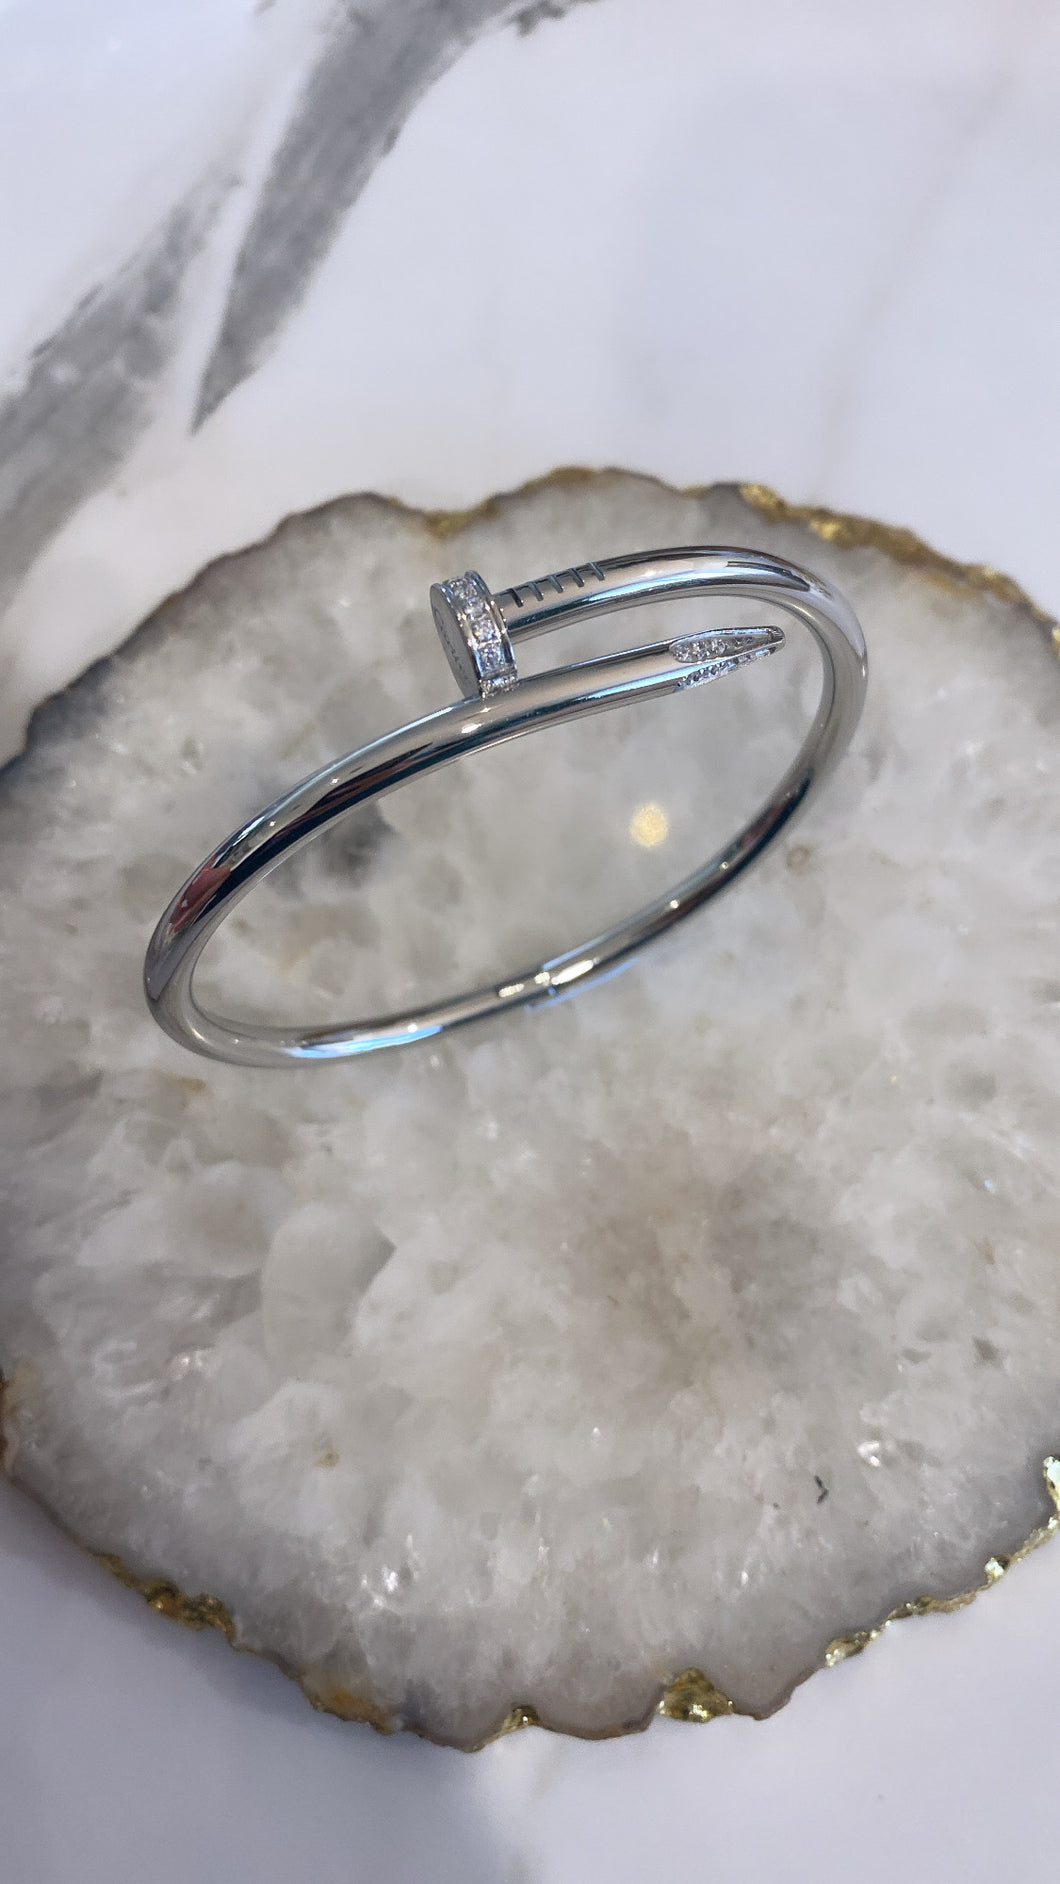 The diamond silver nail bracelet